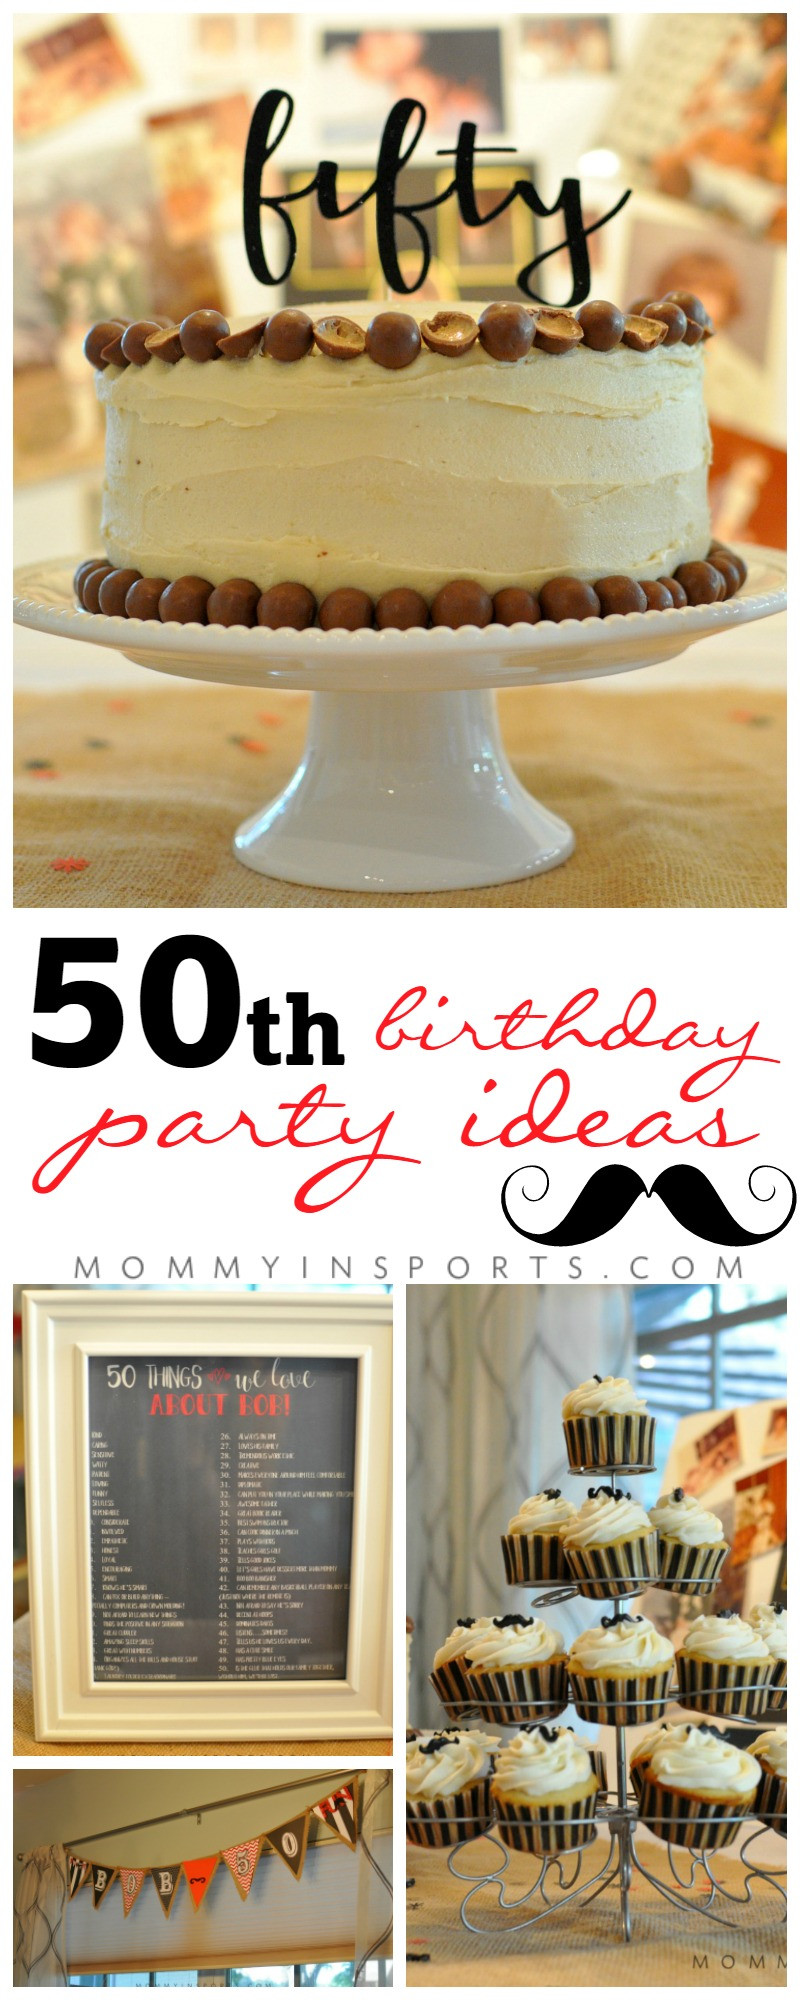 50th Birthday Party Decorations
 50th Birthday Party Ideas Kristen Hewitt